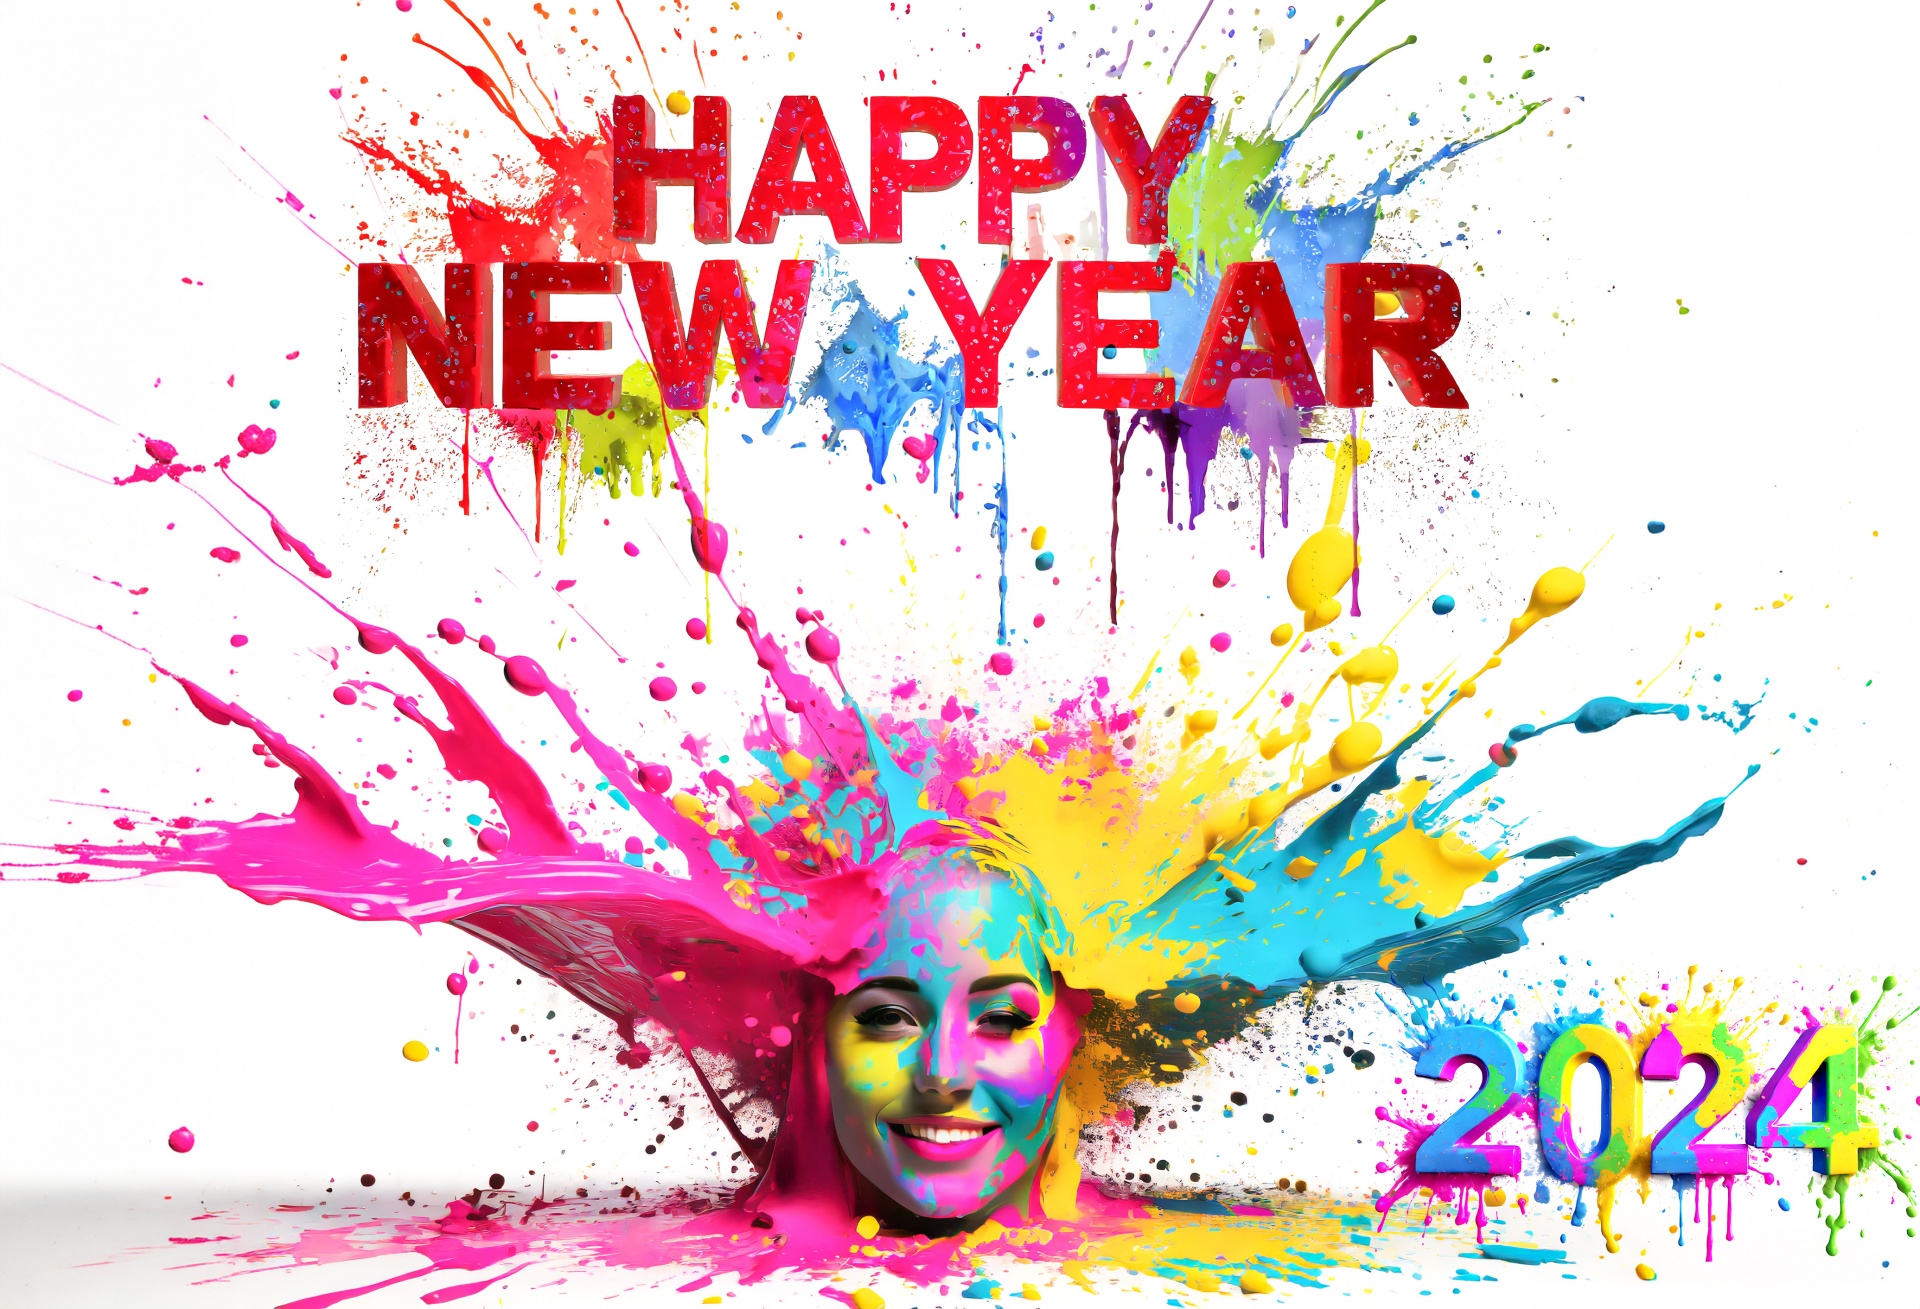 happy-new-year-2024-greeting-card-free-stock-photo-public-domain